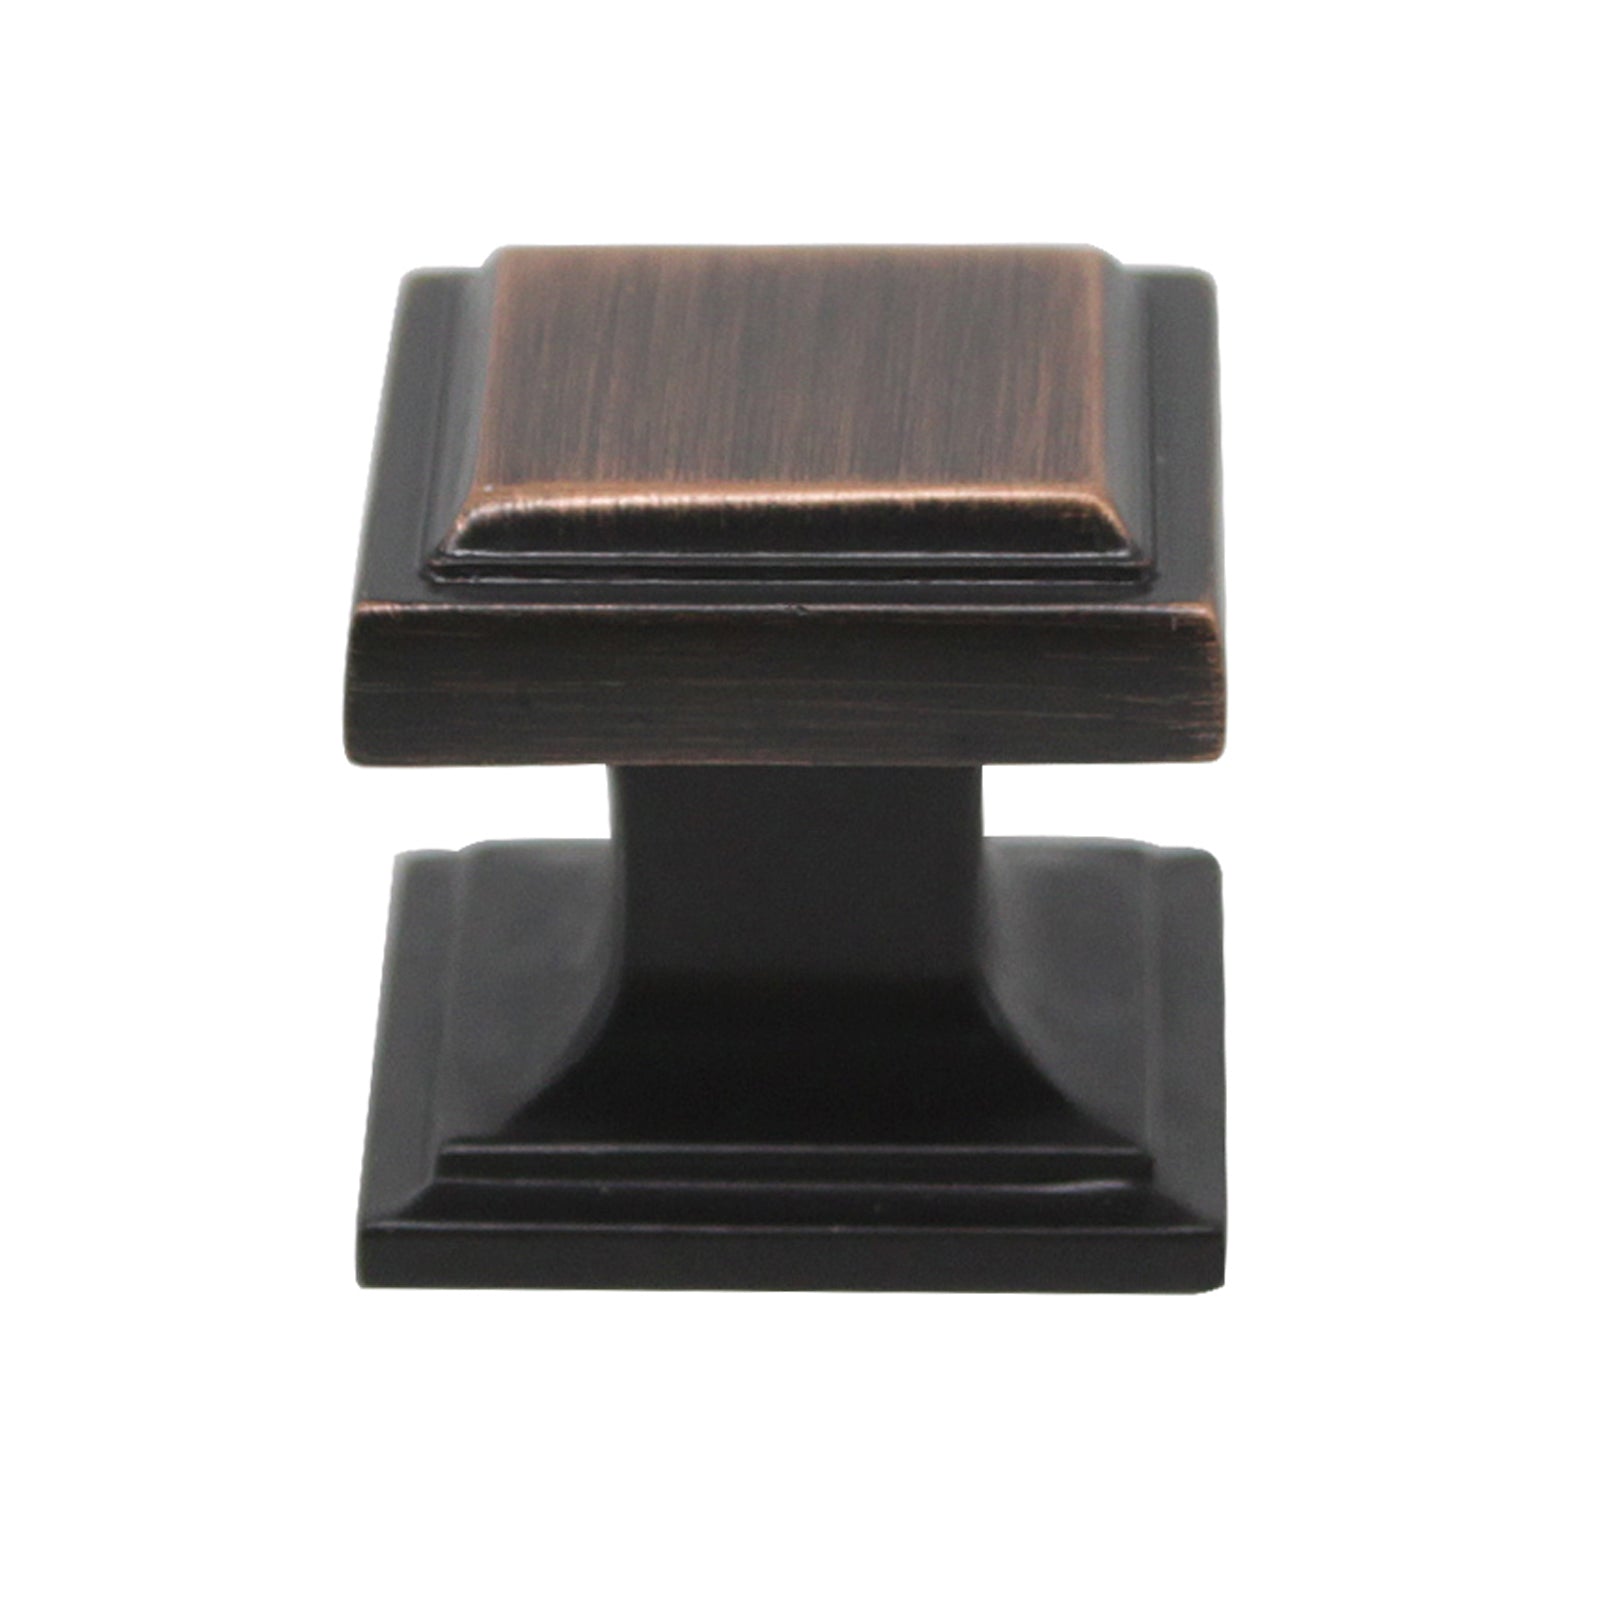 25mm 1inch Square Cabinet Knobs in Oil Rubbed Bronze / Black PS7110 - Probrico